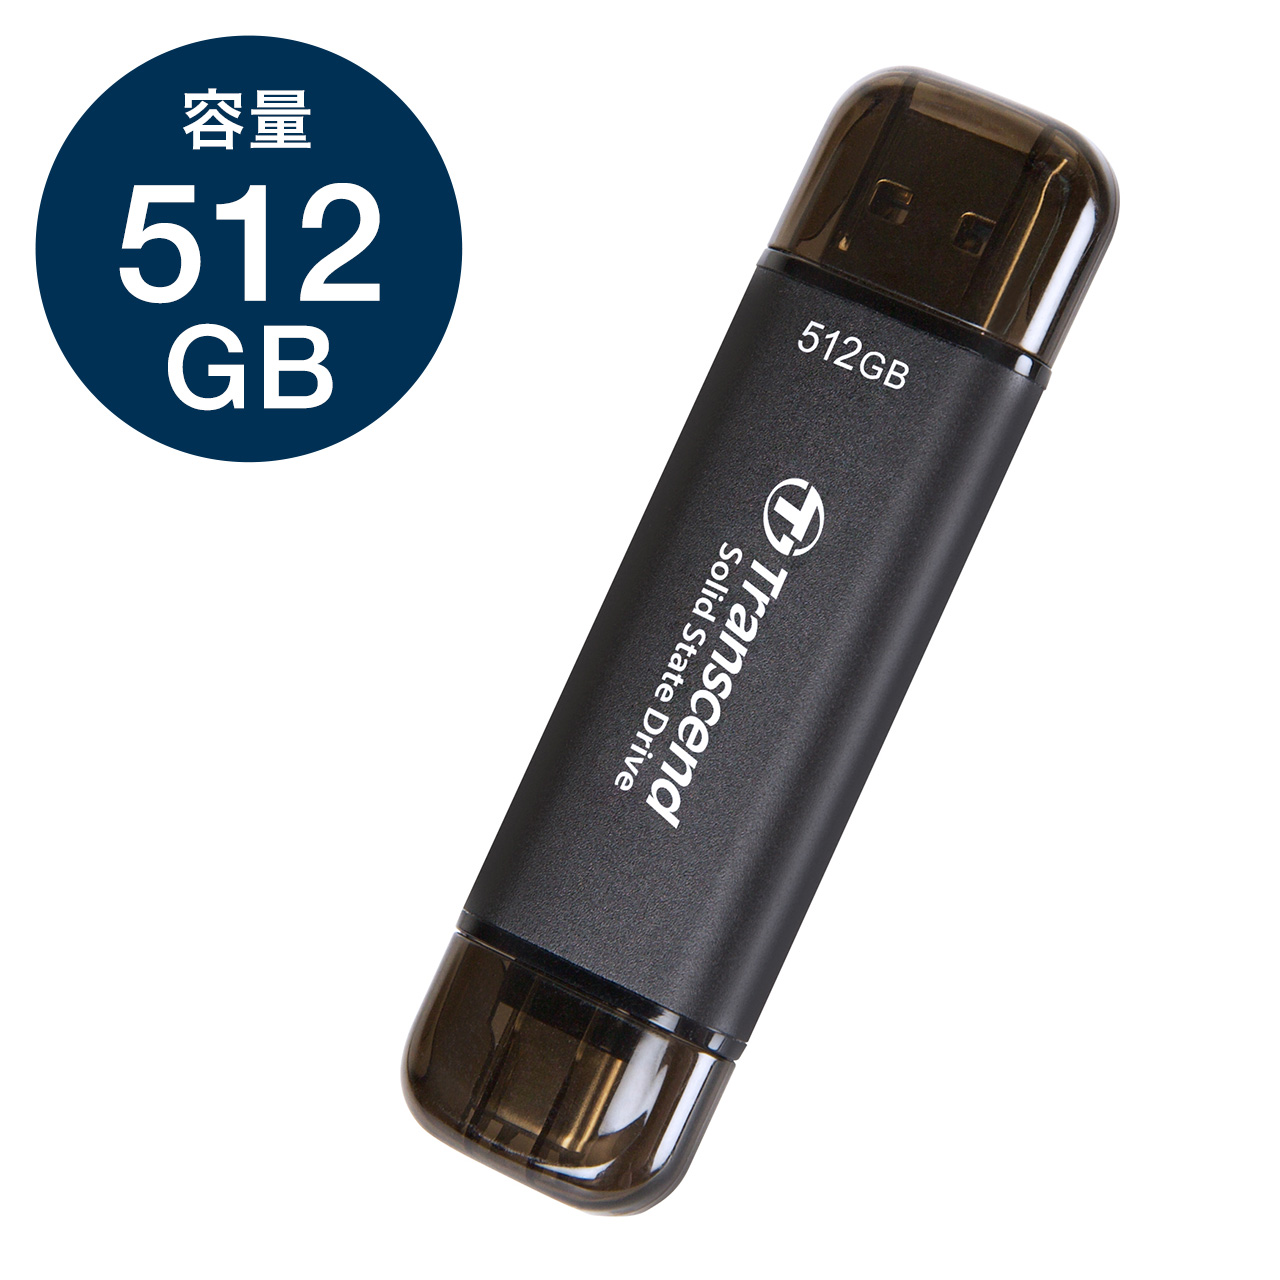 Transcend スティックSSD 512GB ESD310 ポータブルSSD USB3.2 Gen2 